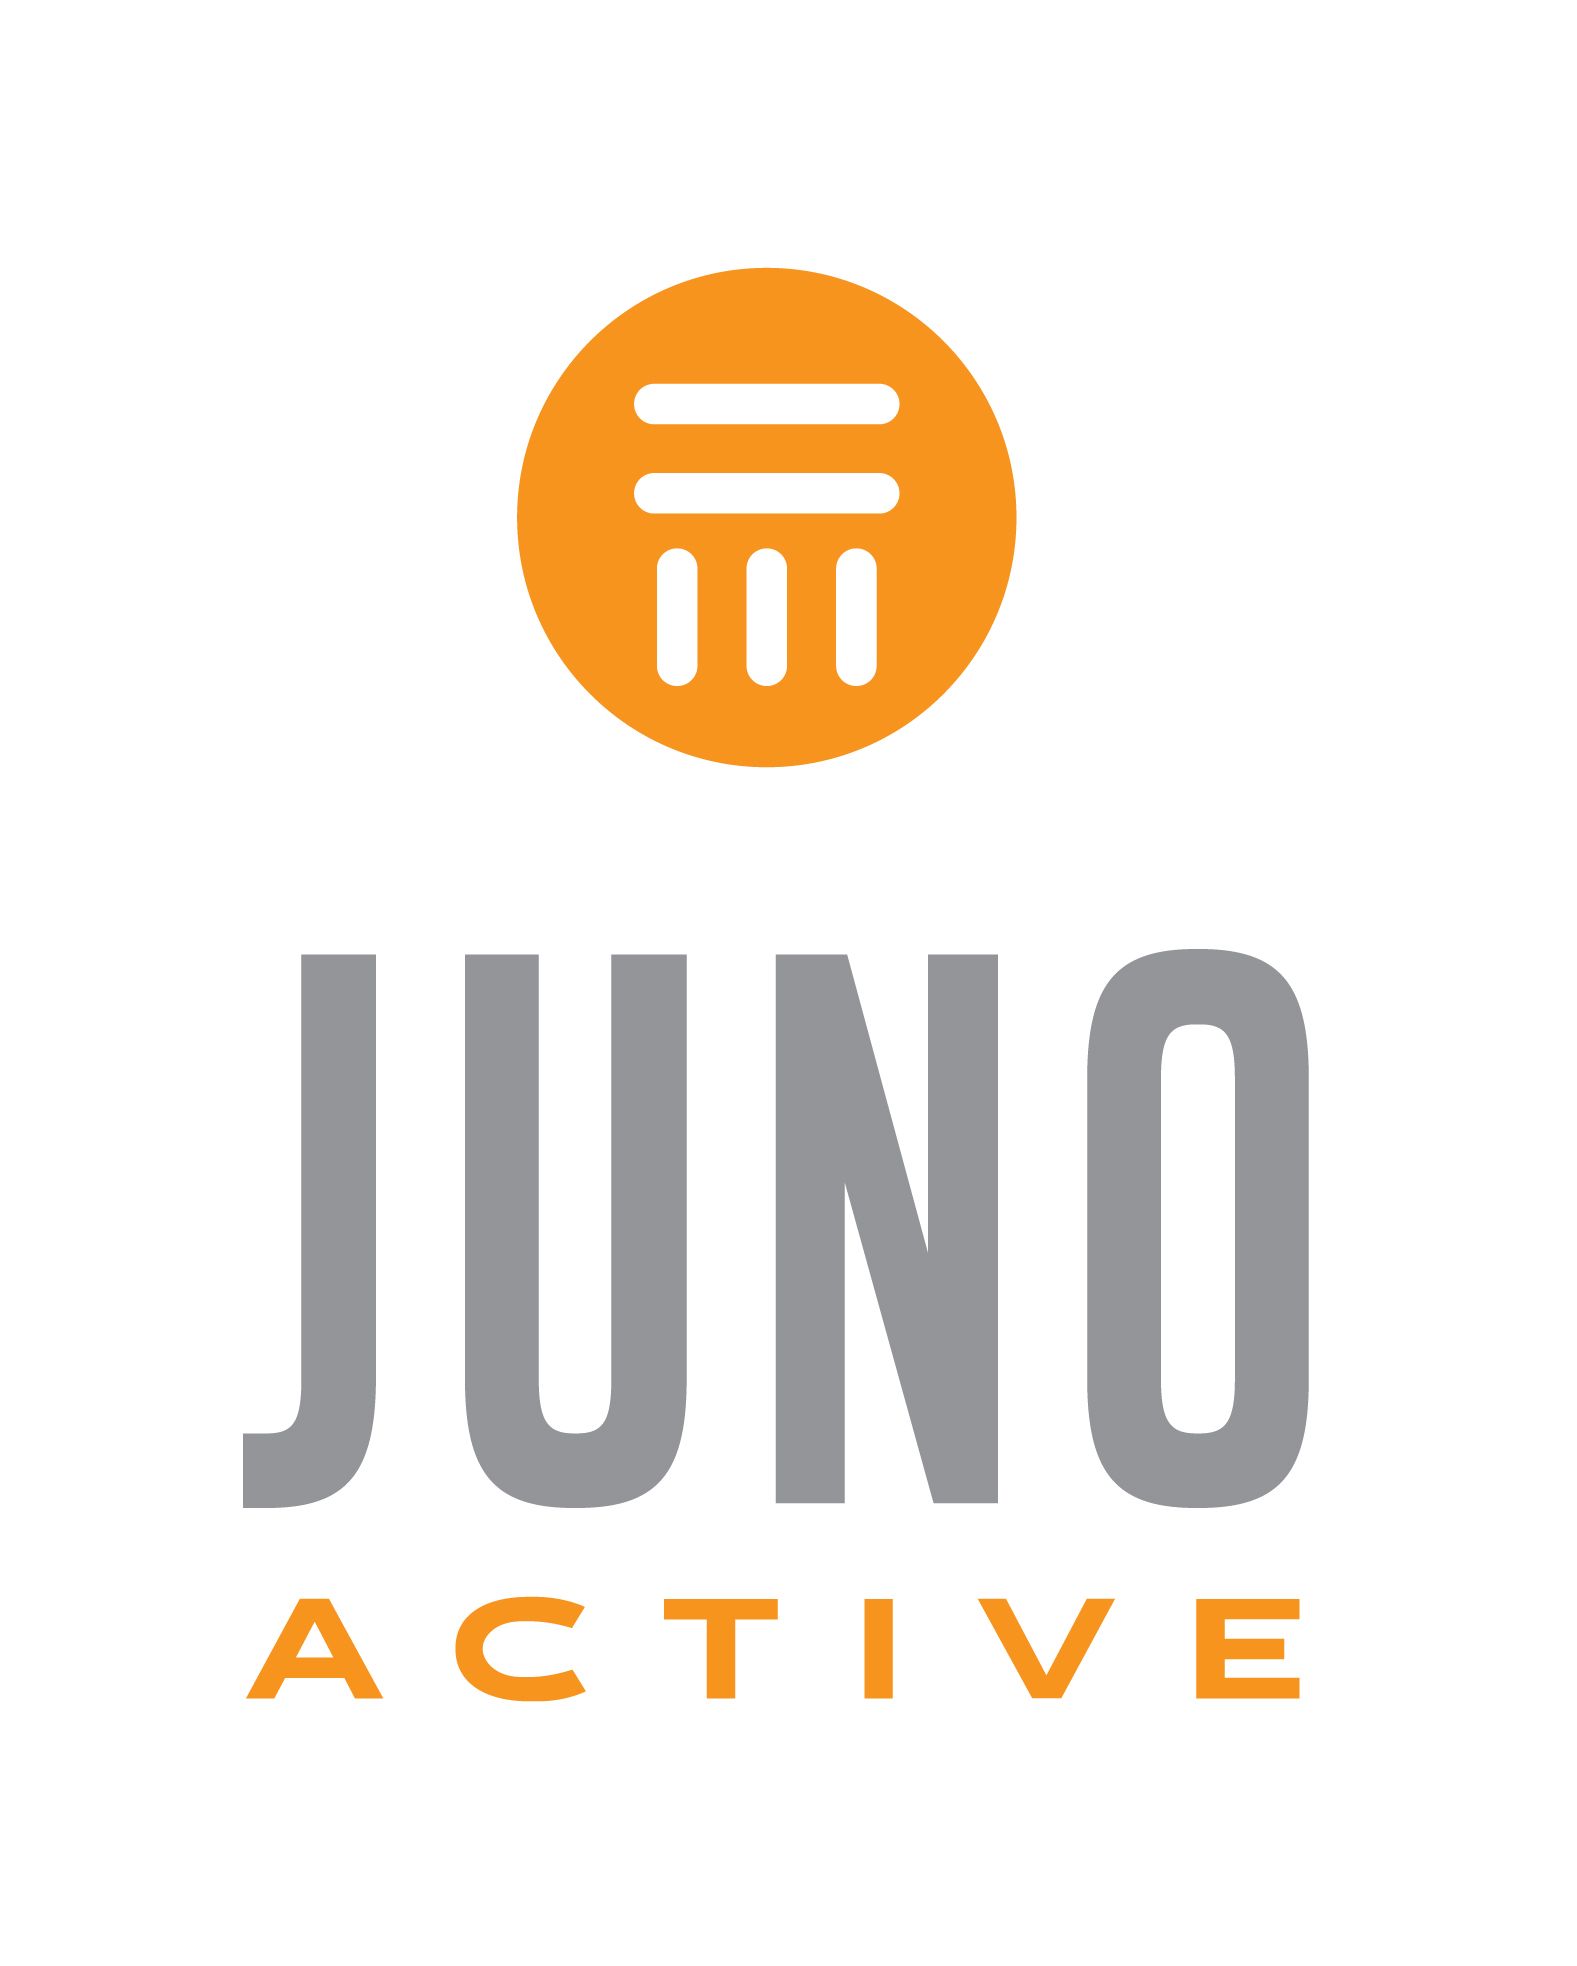 JunoActive Logo